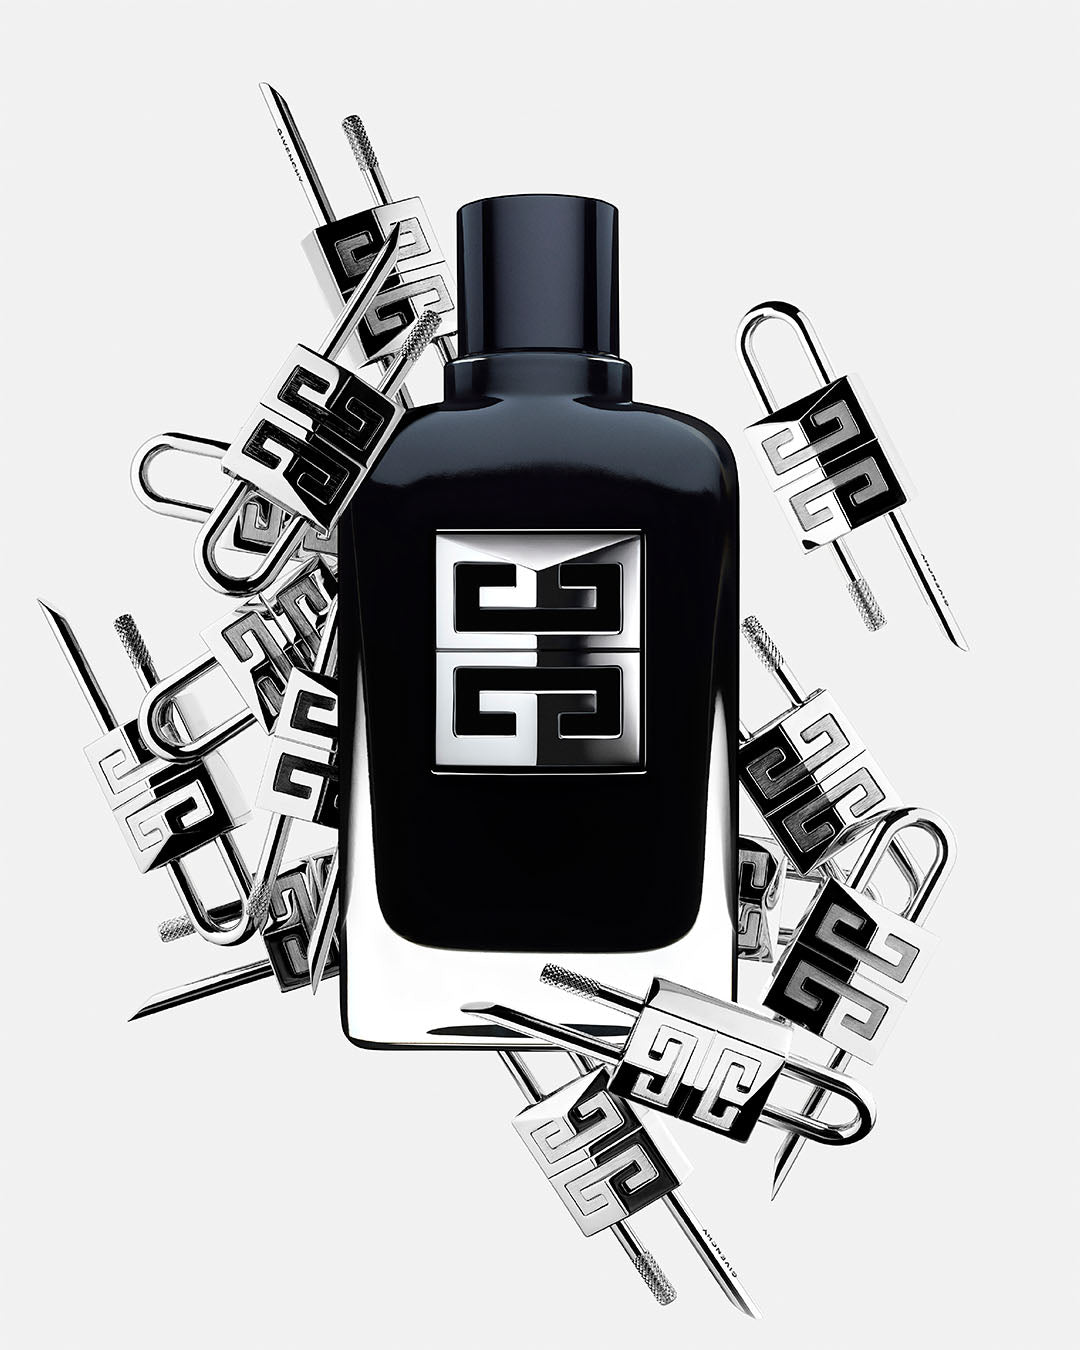 Givenchy Gentleman Society Eau de Parfum- www.theperfumestoreinc.com #perfume